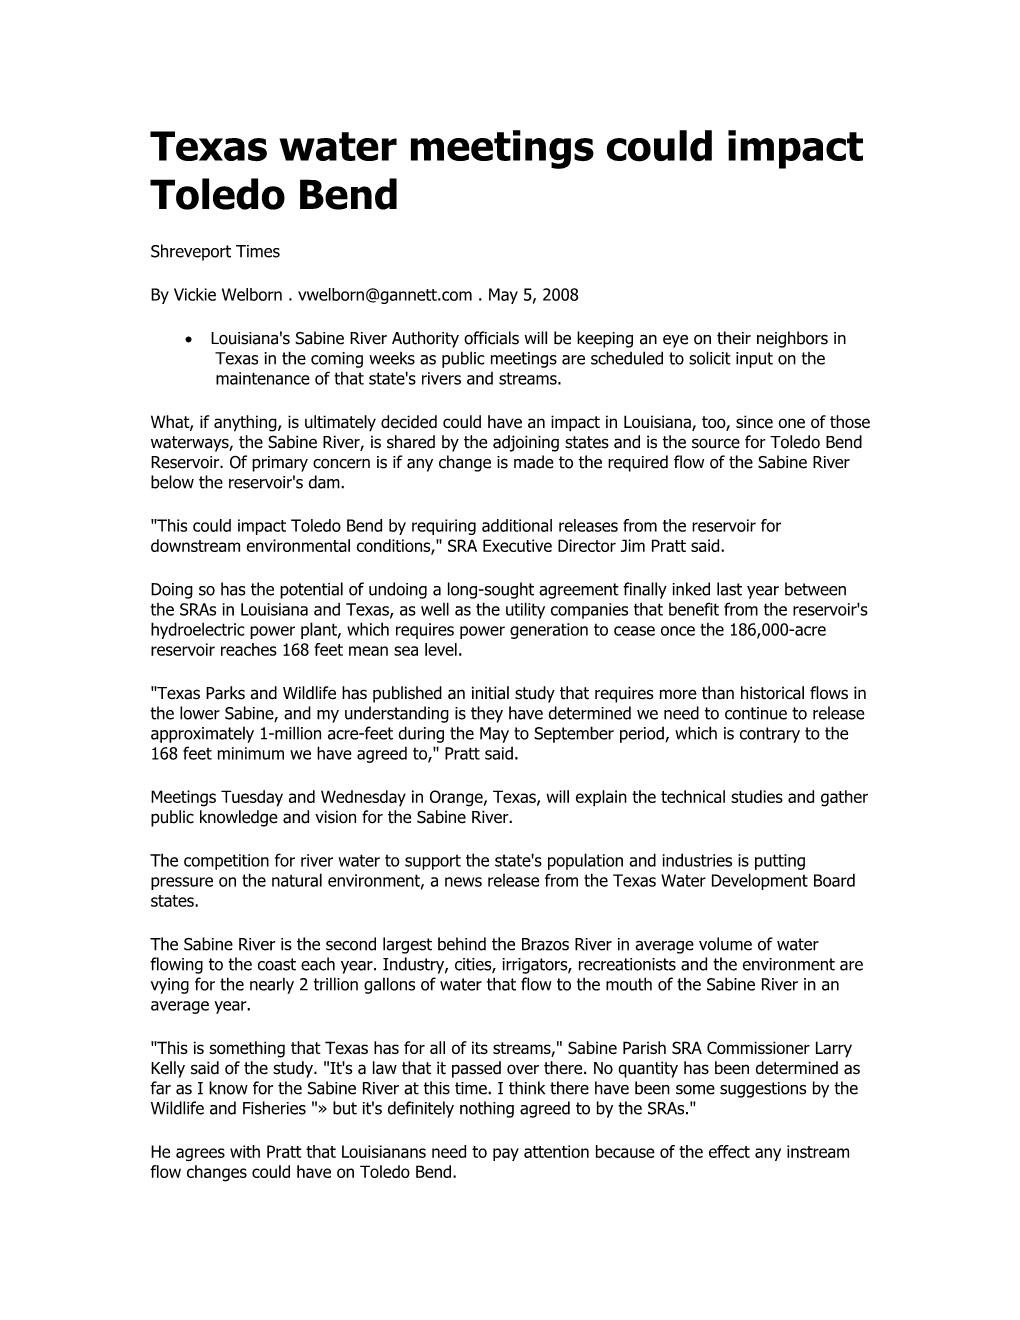 Texas Water Meetings Could Impact Toledo Bend